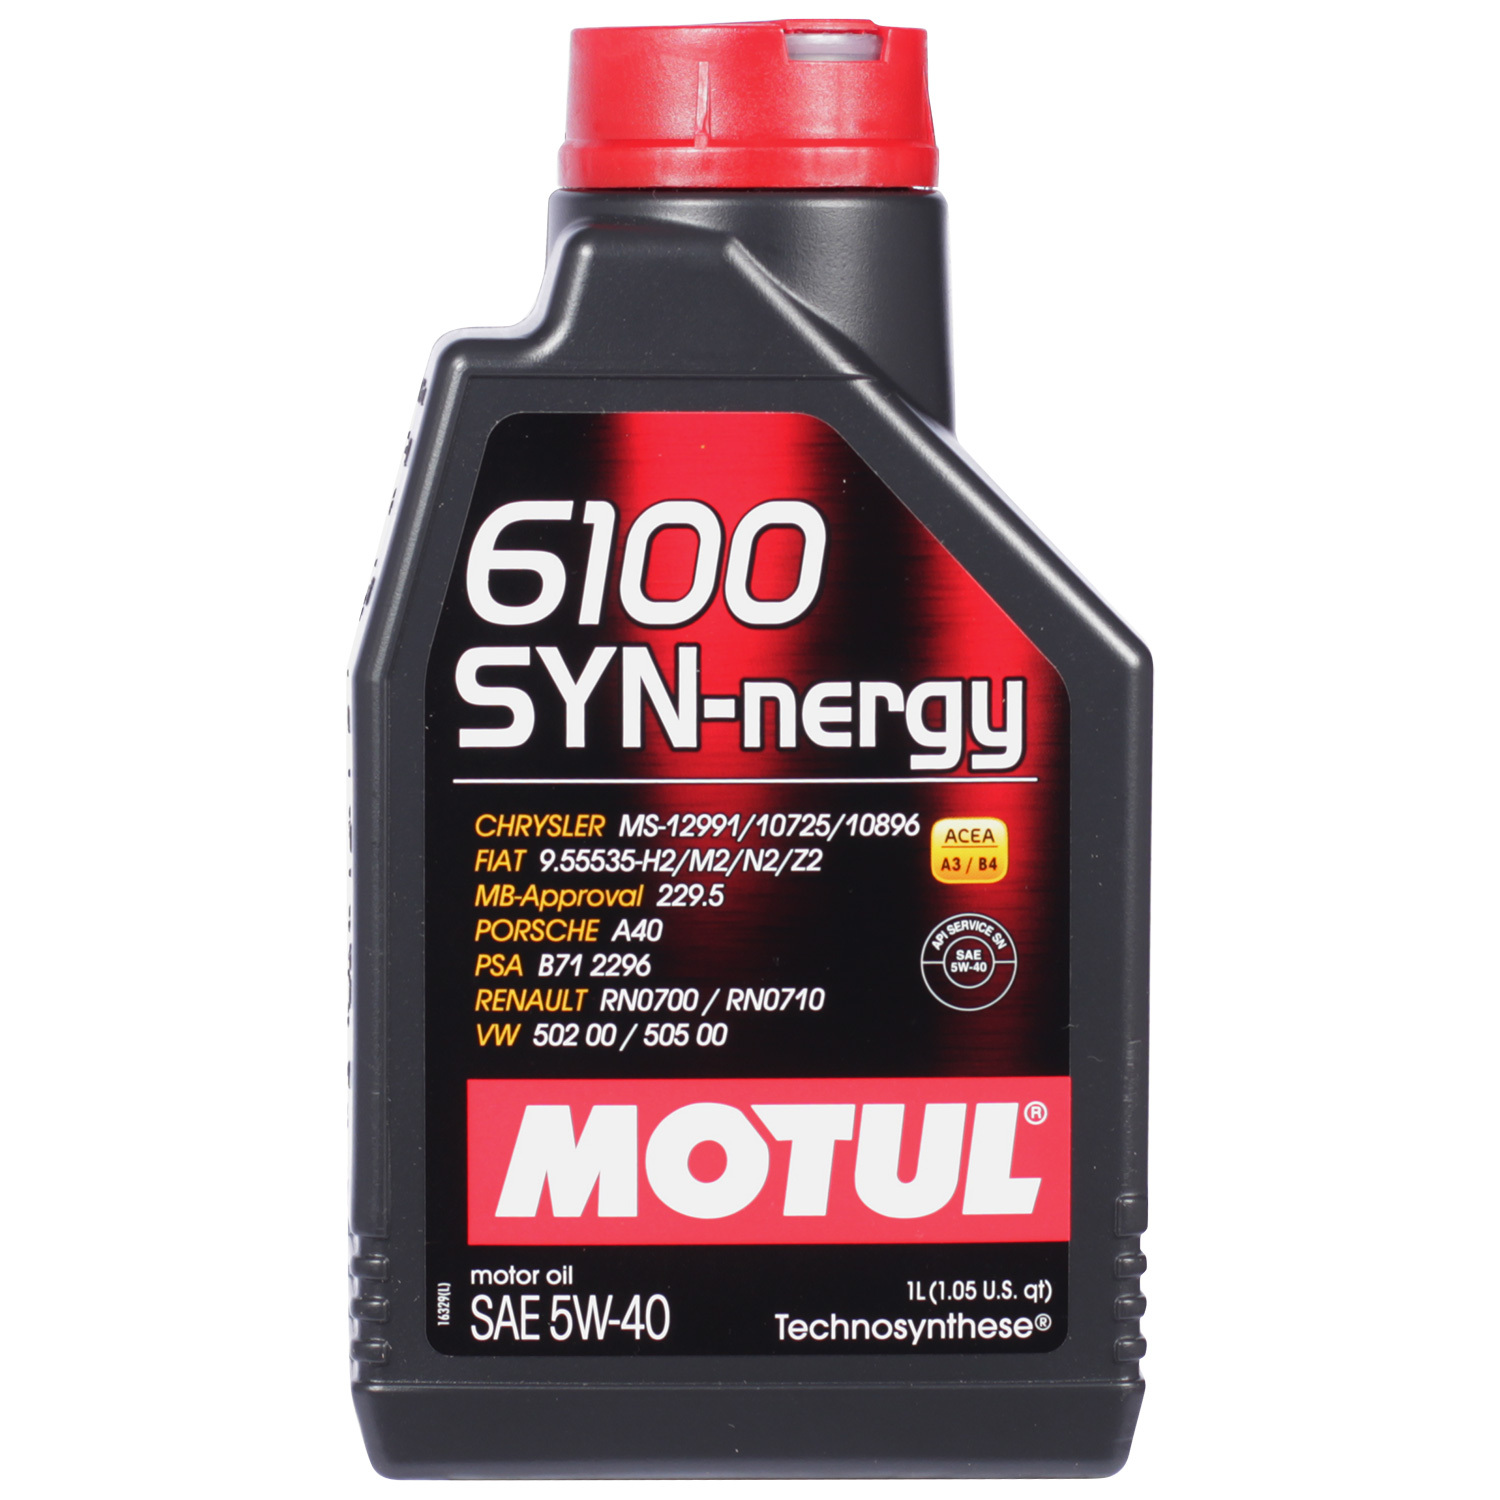 Motul Моторное масло Motul 6100 SYN-NERGY 5W-40, 1 л цена и фото